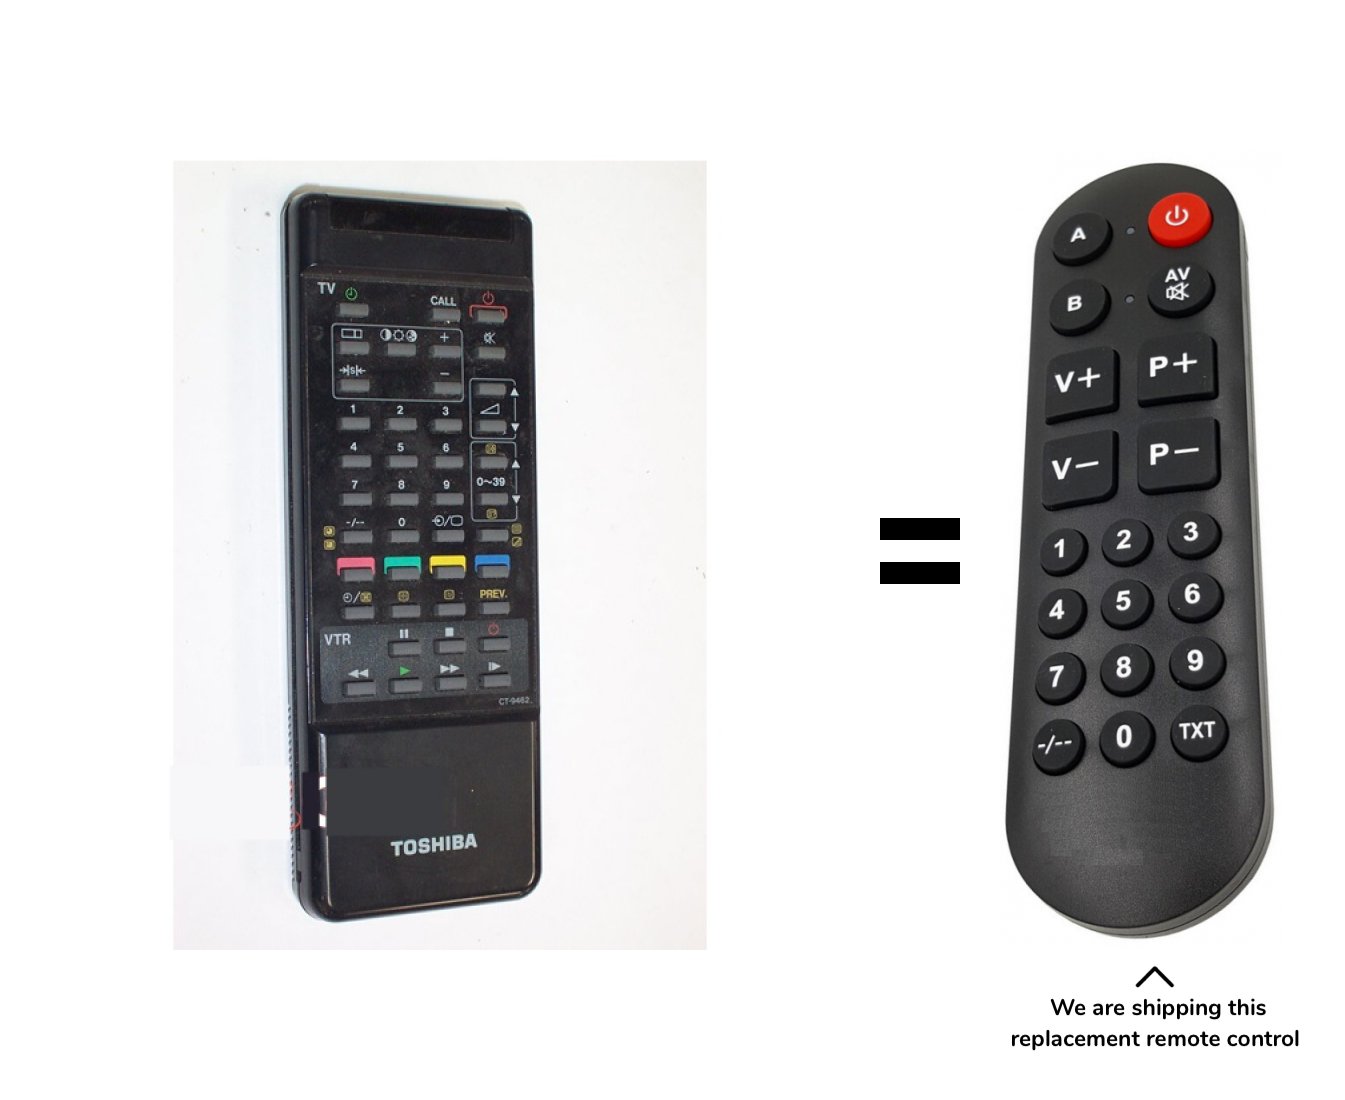 Toshiba CT-9581 remote control for seniors